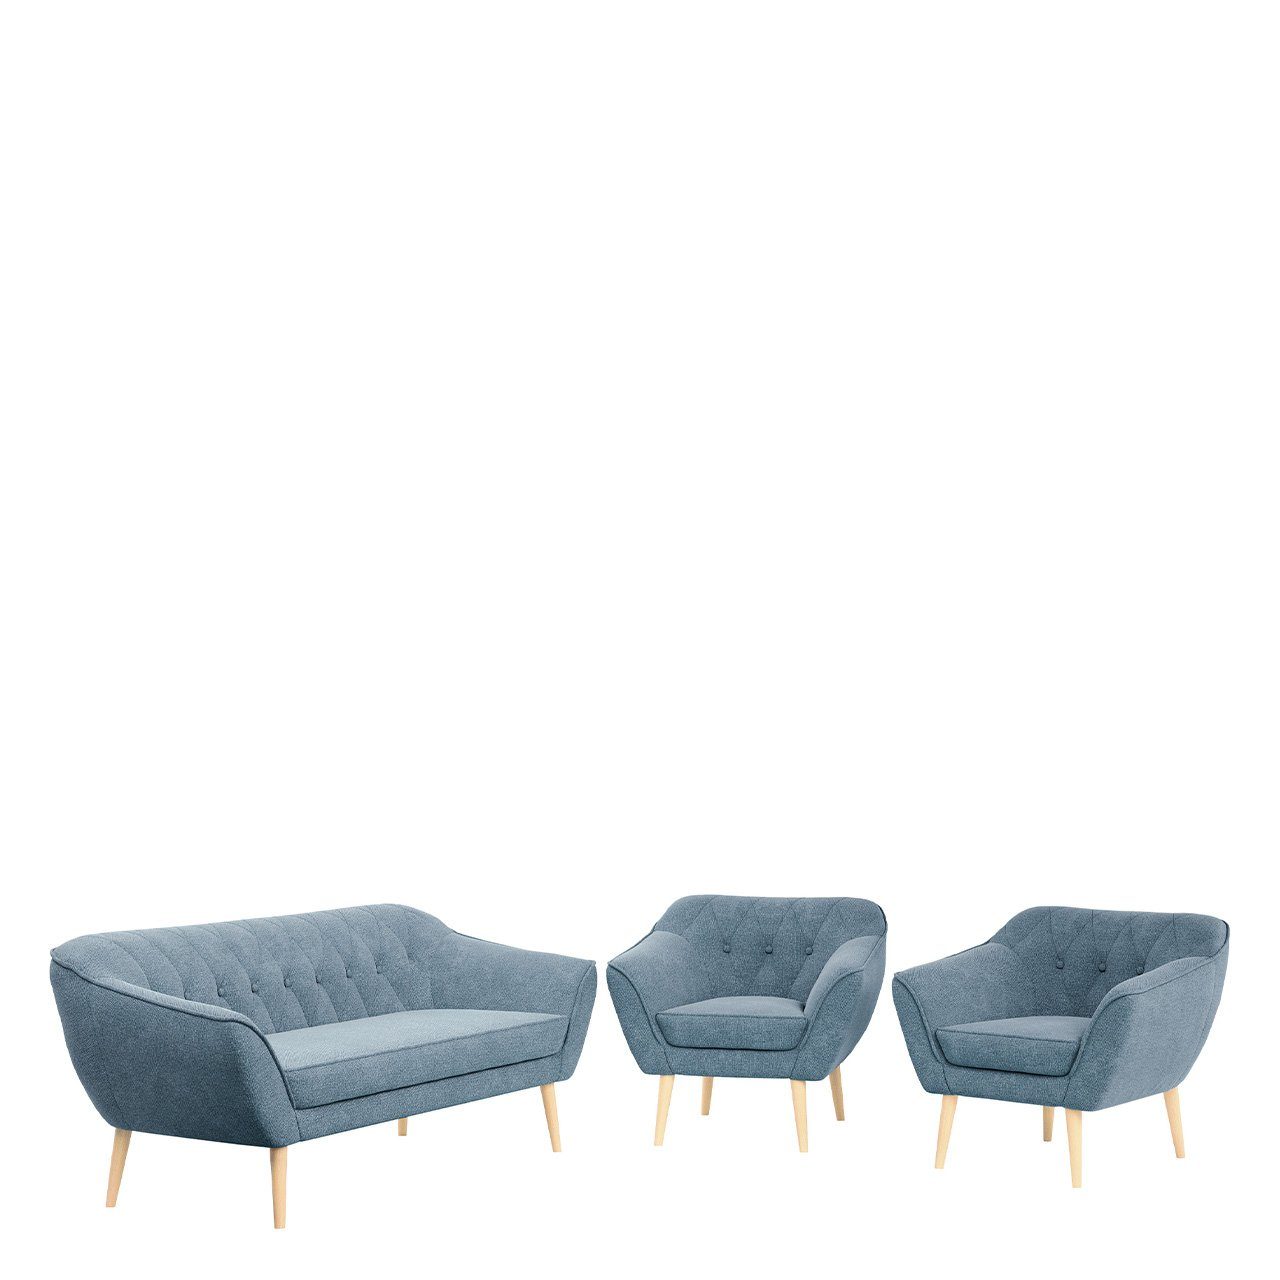 PIRS mit Set, 1 Sofa Matana 1, MÖBEL Moderne Sofa Relaxfunktion, Skandinavische MKS Deko Blau 3